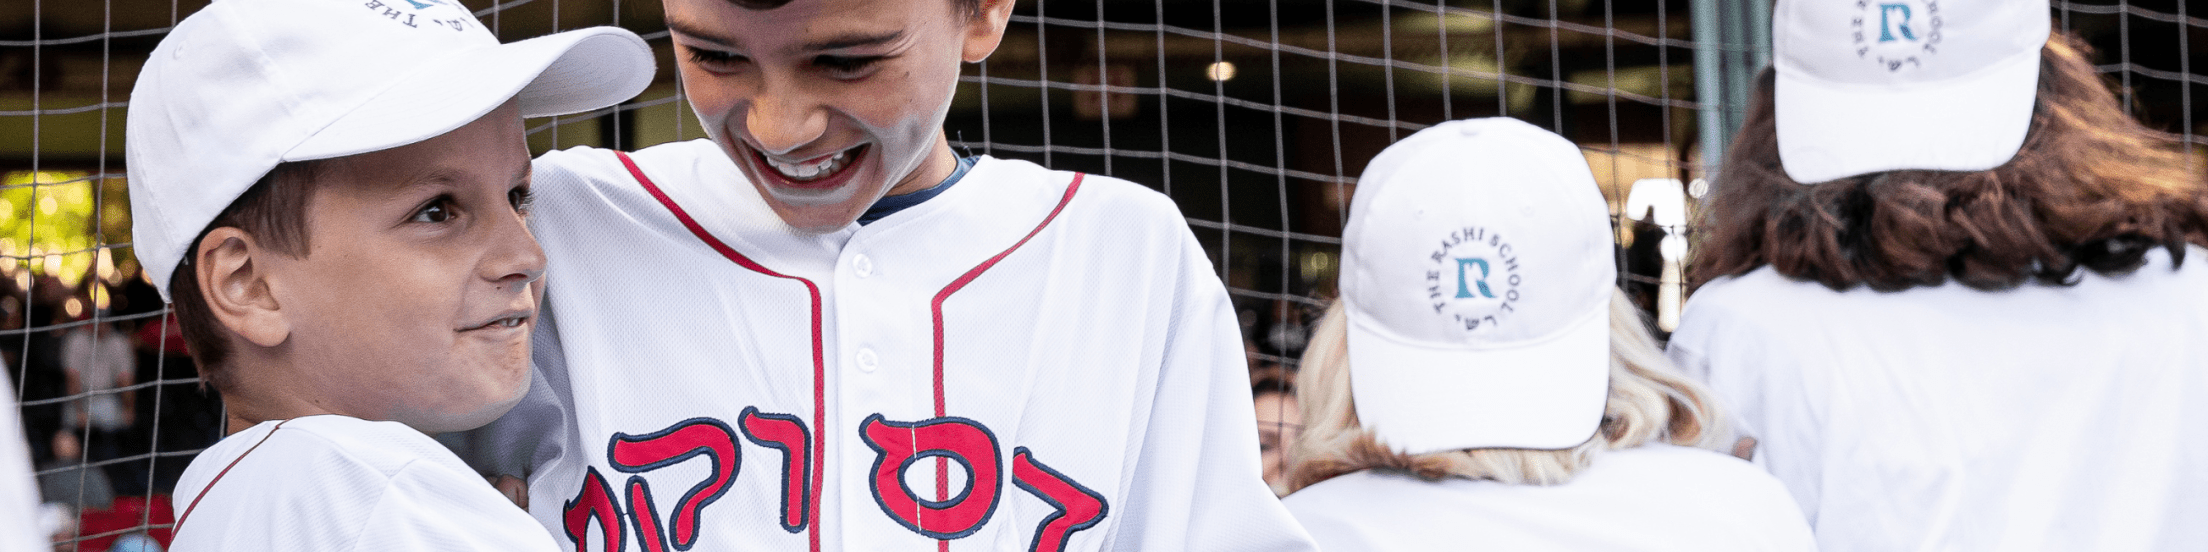 Red Sox celebrate Boston's Jewish-baseball connection